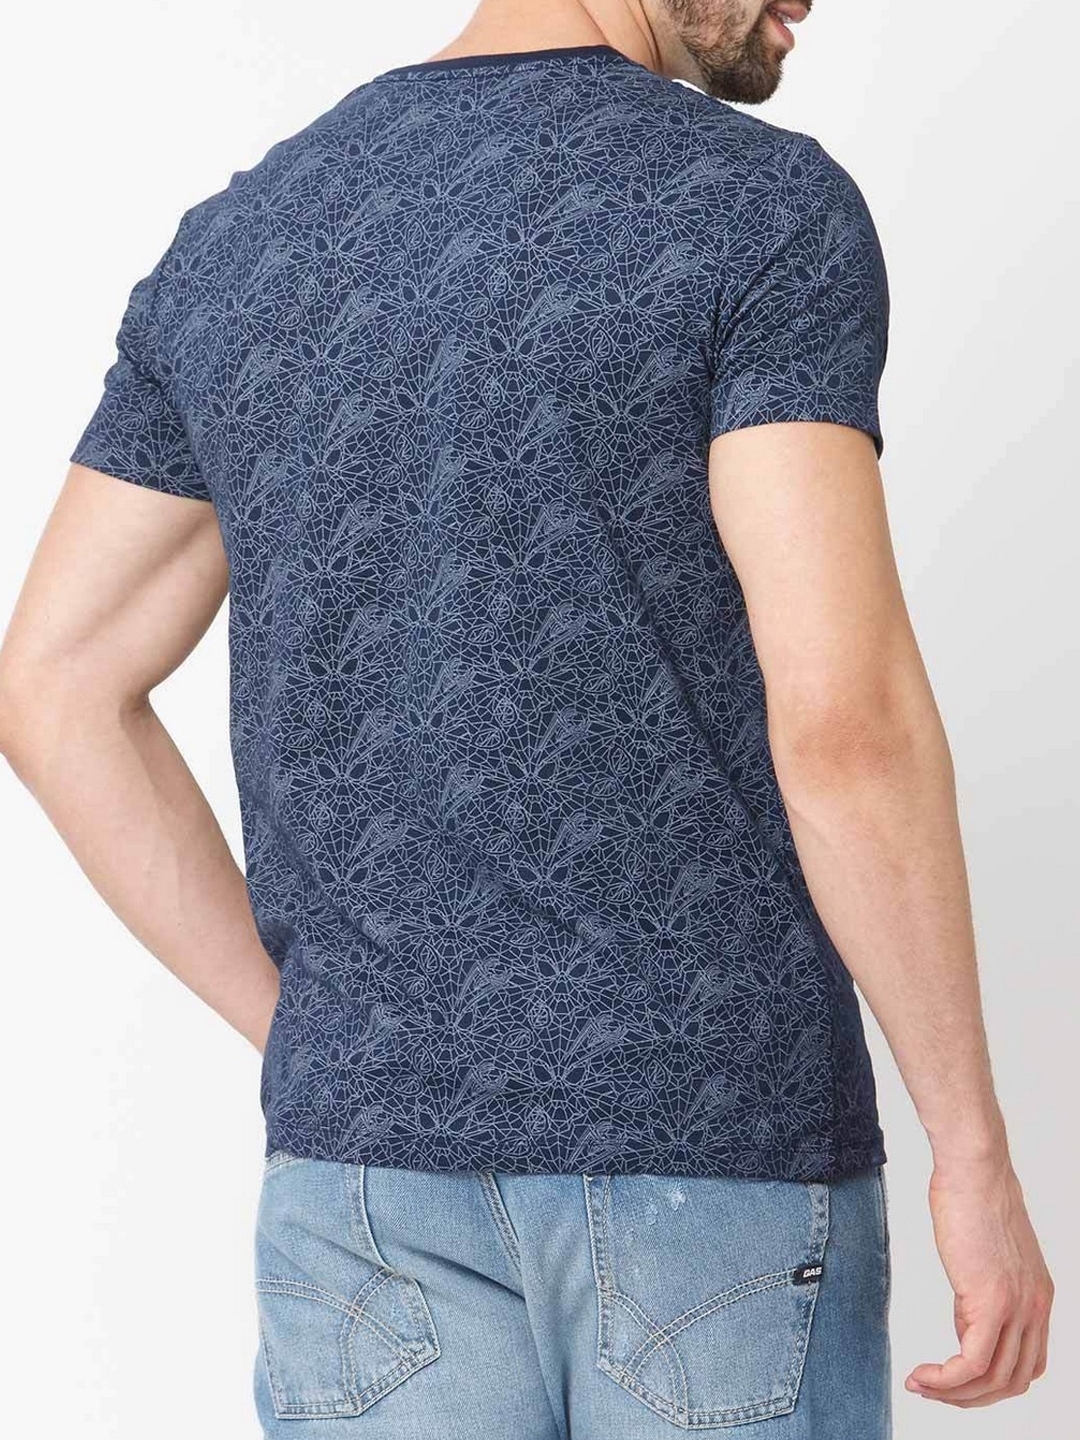 Men's Cobweb printed crew neck indigo t-shirt